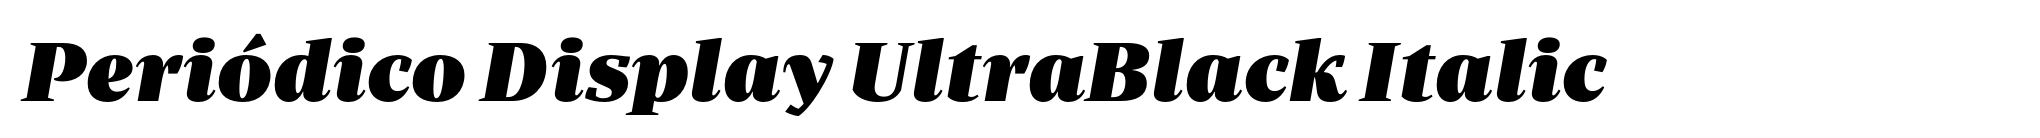 Periódico Display UltraBlack Italic image